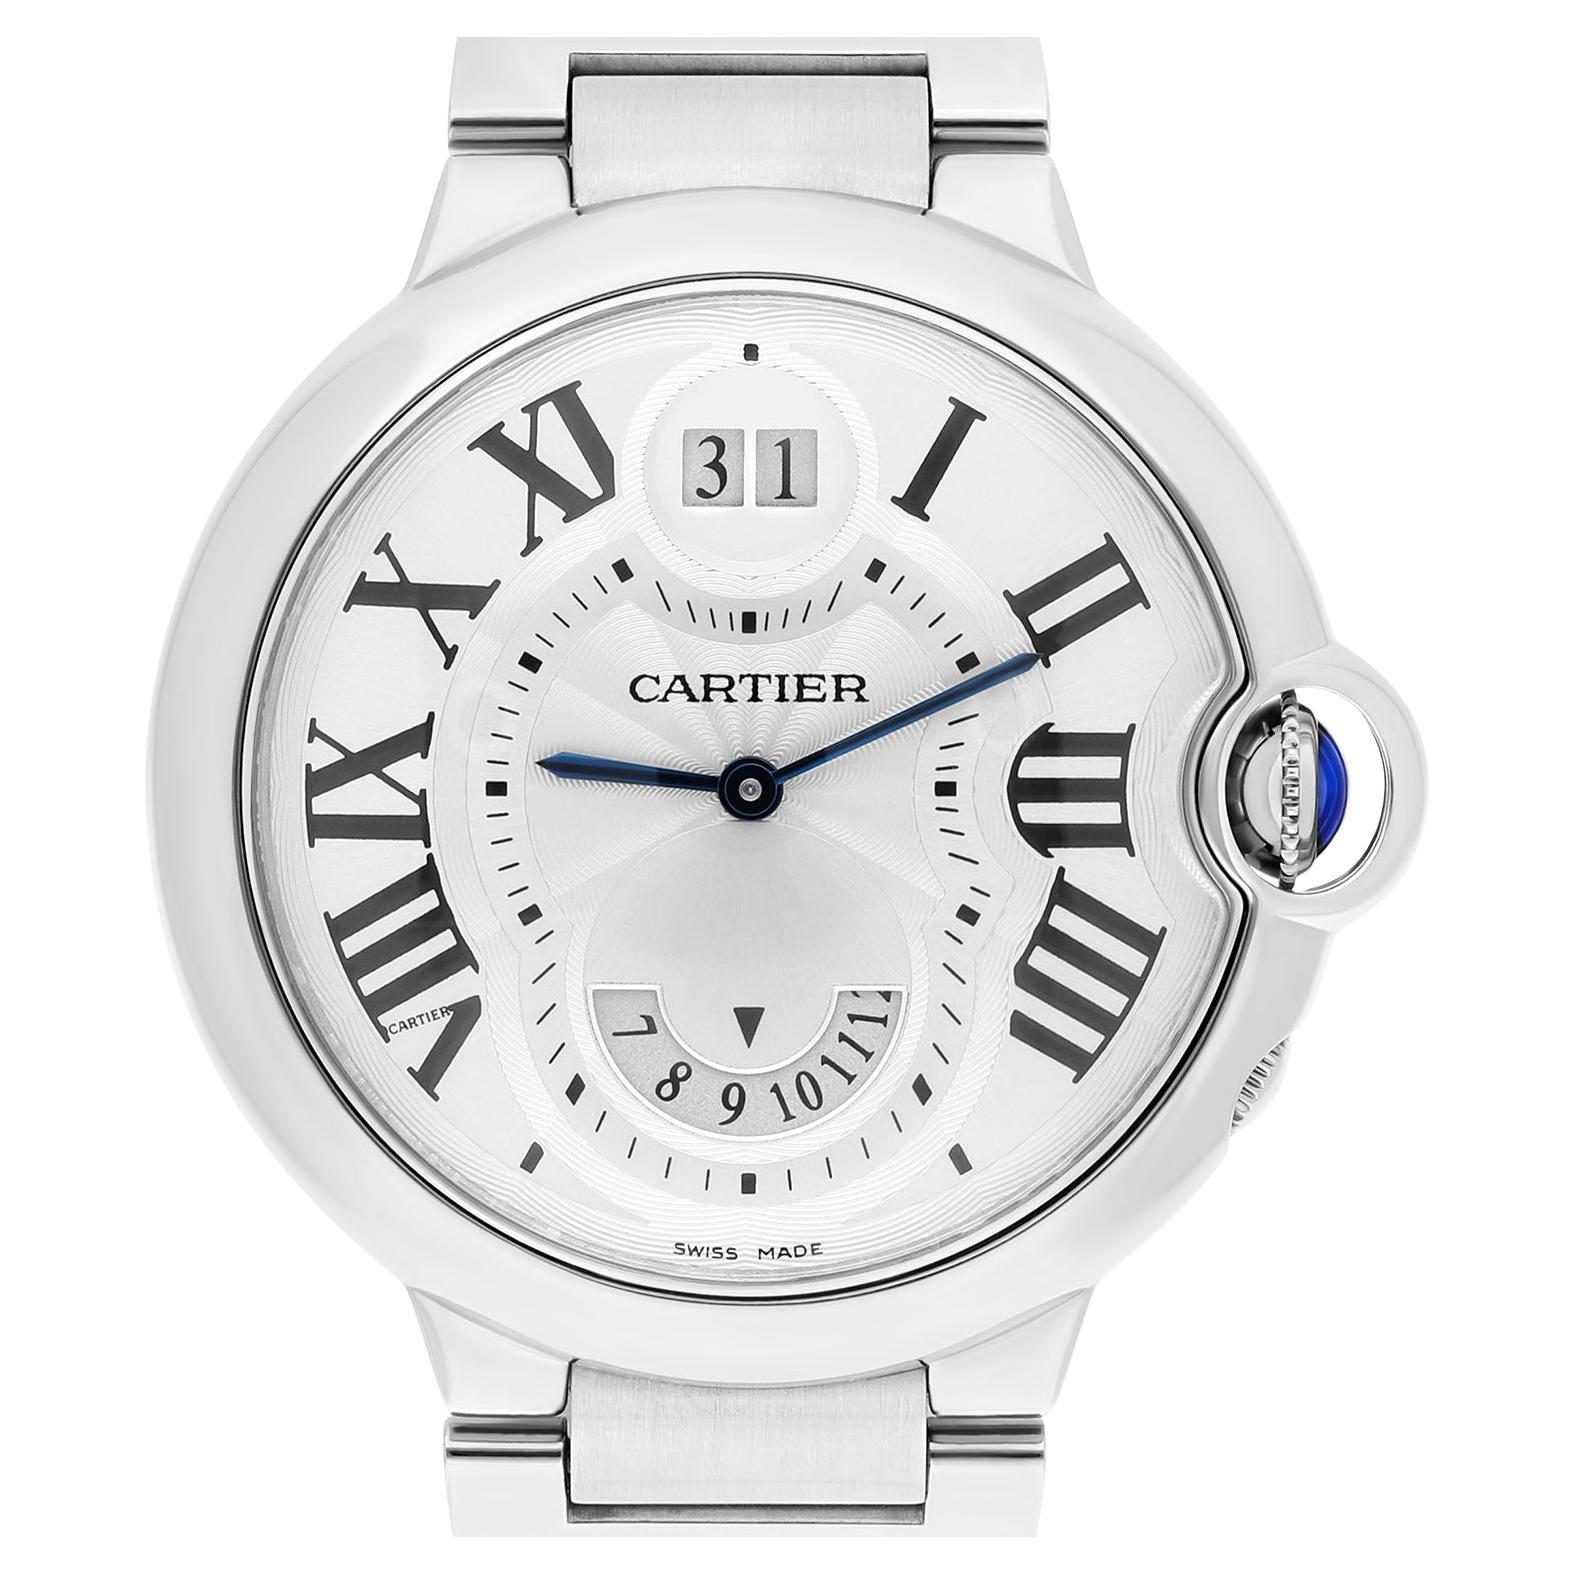 Cartier Ballon Bleu Stainless Steel Two Timezone Quartz Watch 38MM W6920011 For Sale